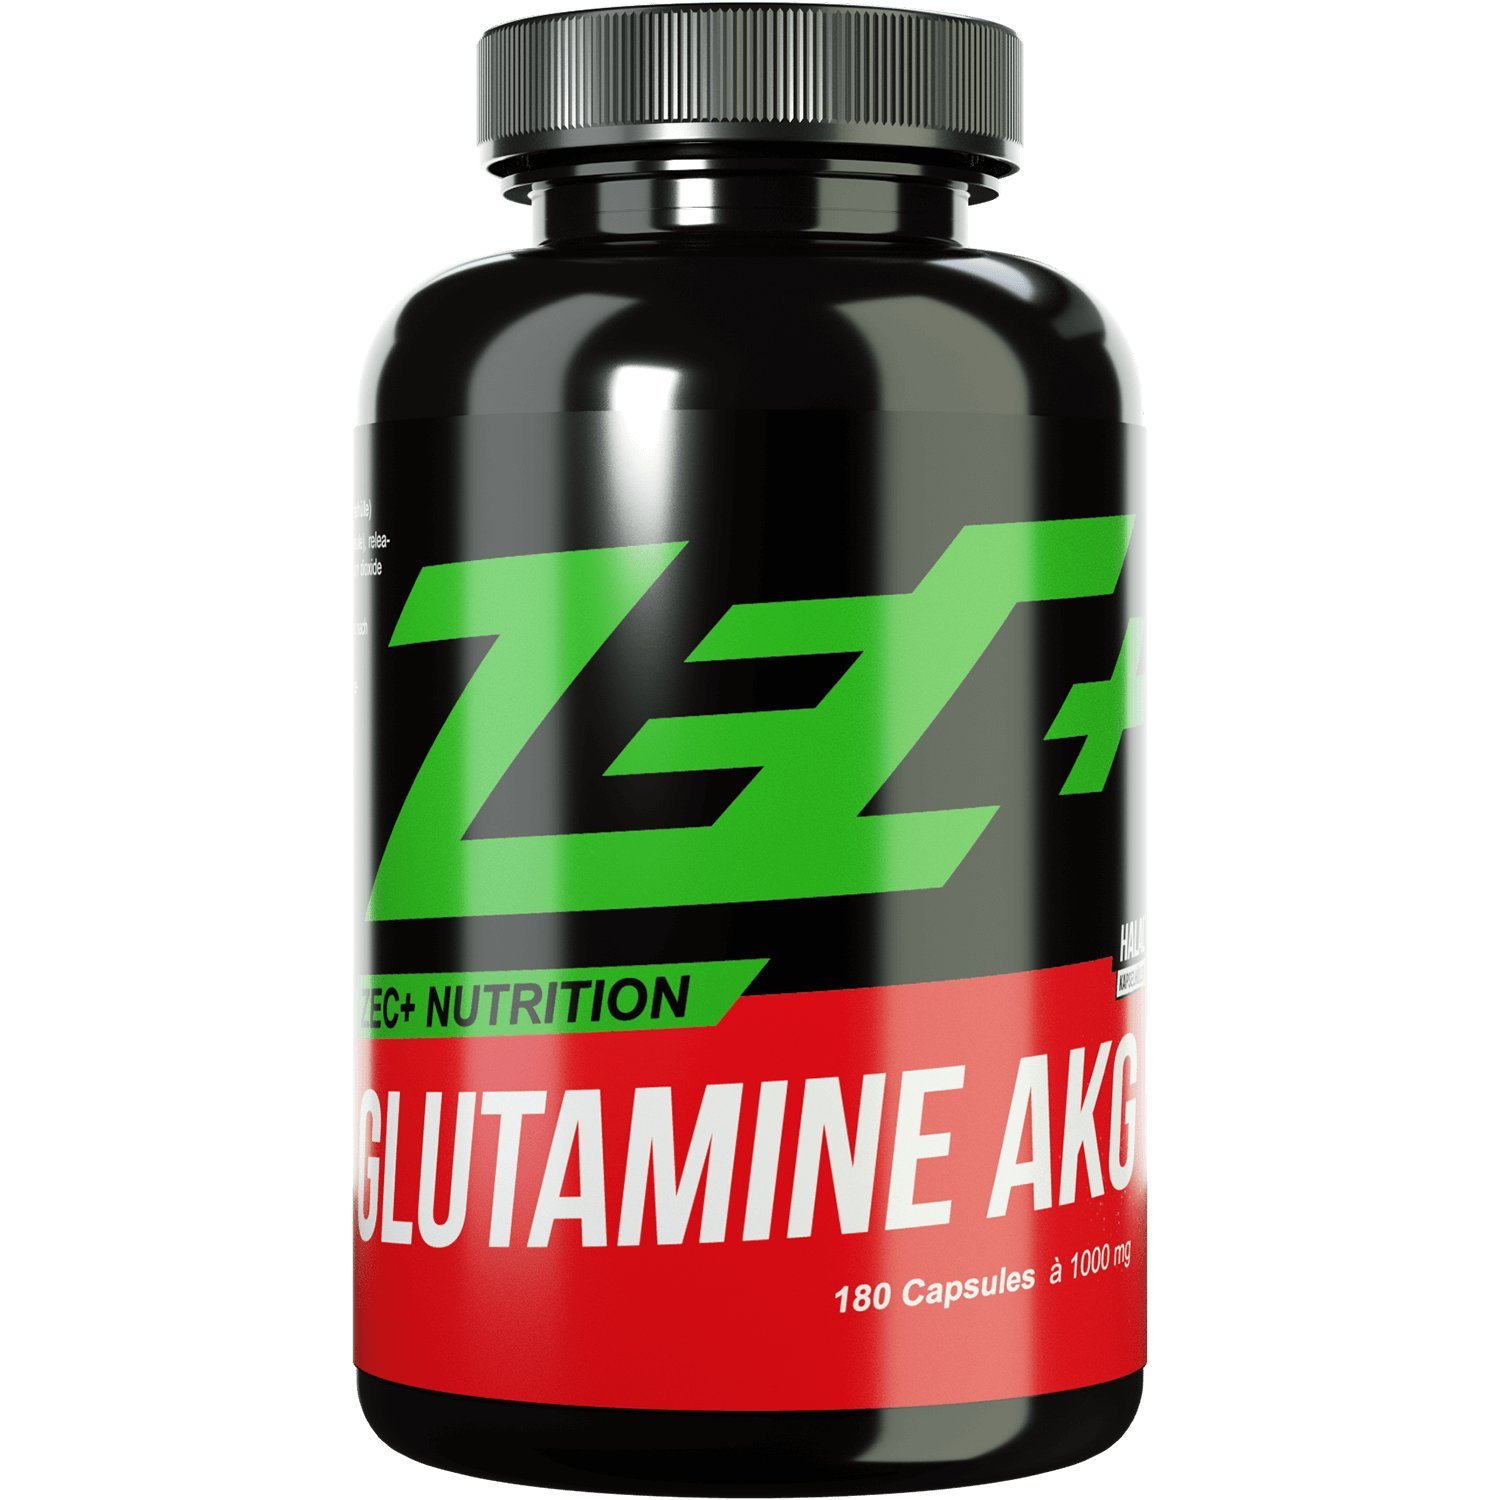 Zec+ Nutrition Glutamin AKG – 180 Glutamin Kapseln mit 1000 mg L-Glutamin-Alphaketoglutarat, enthält hochdosiertes Aminosäuren Pulver Made in Germany